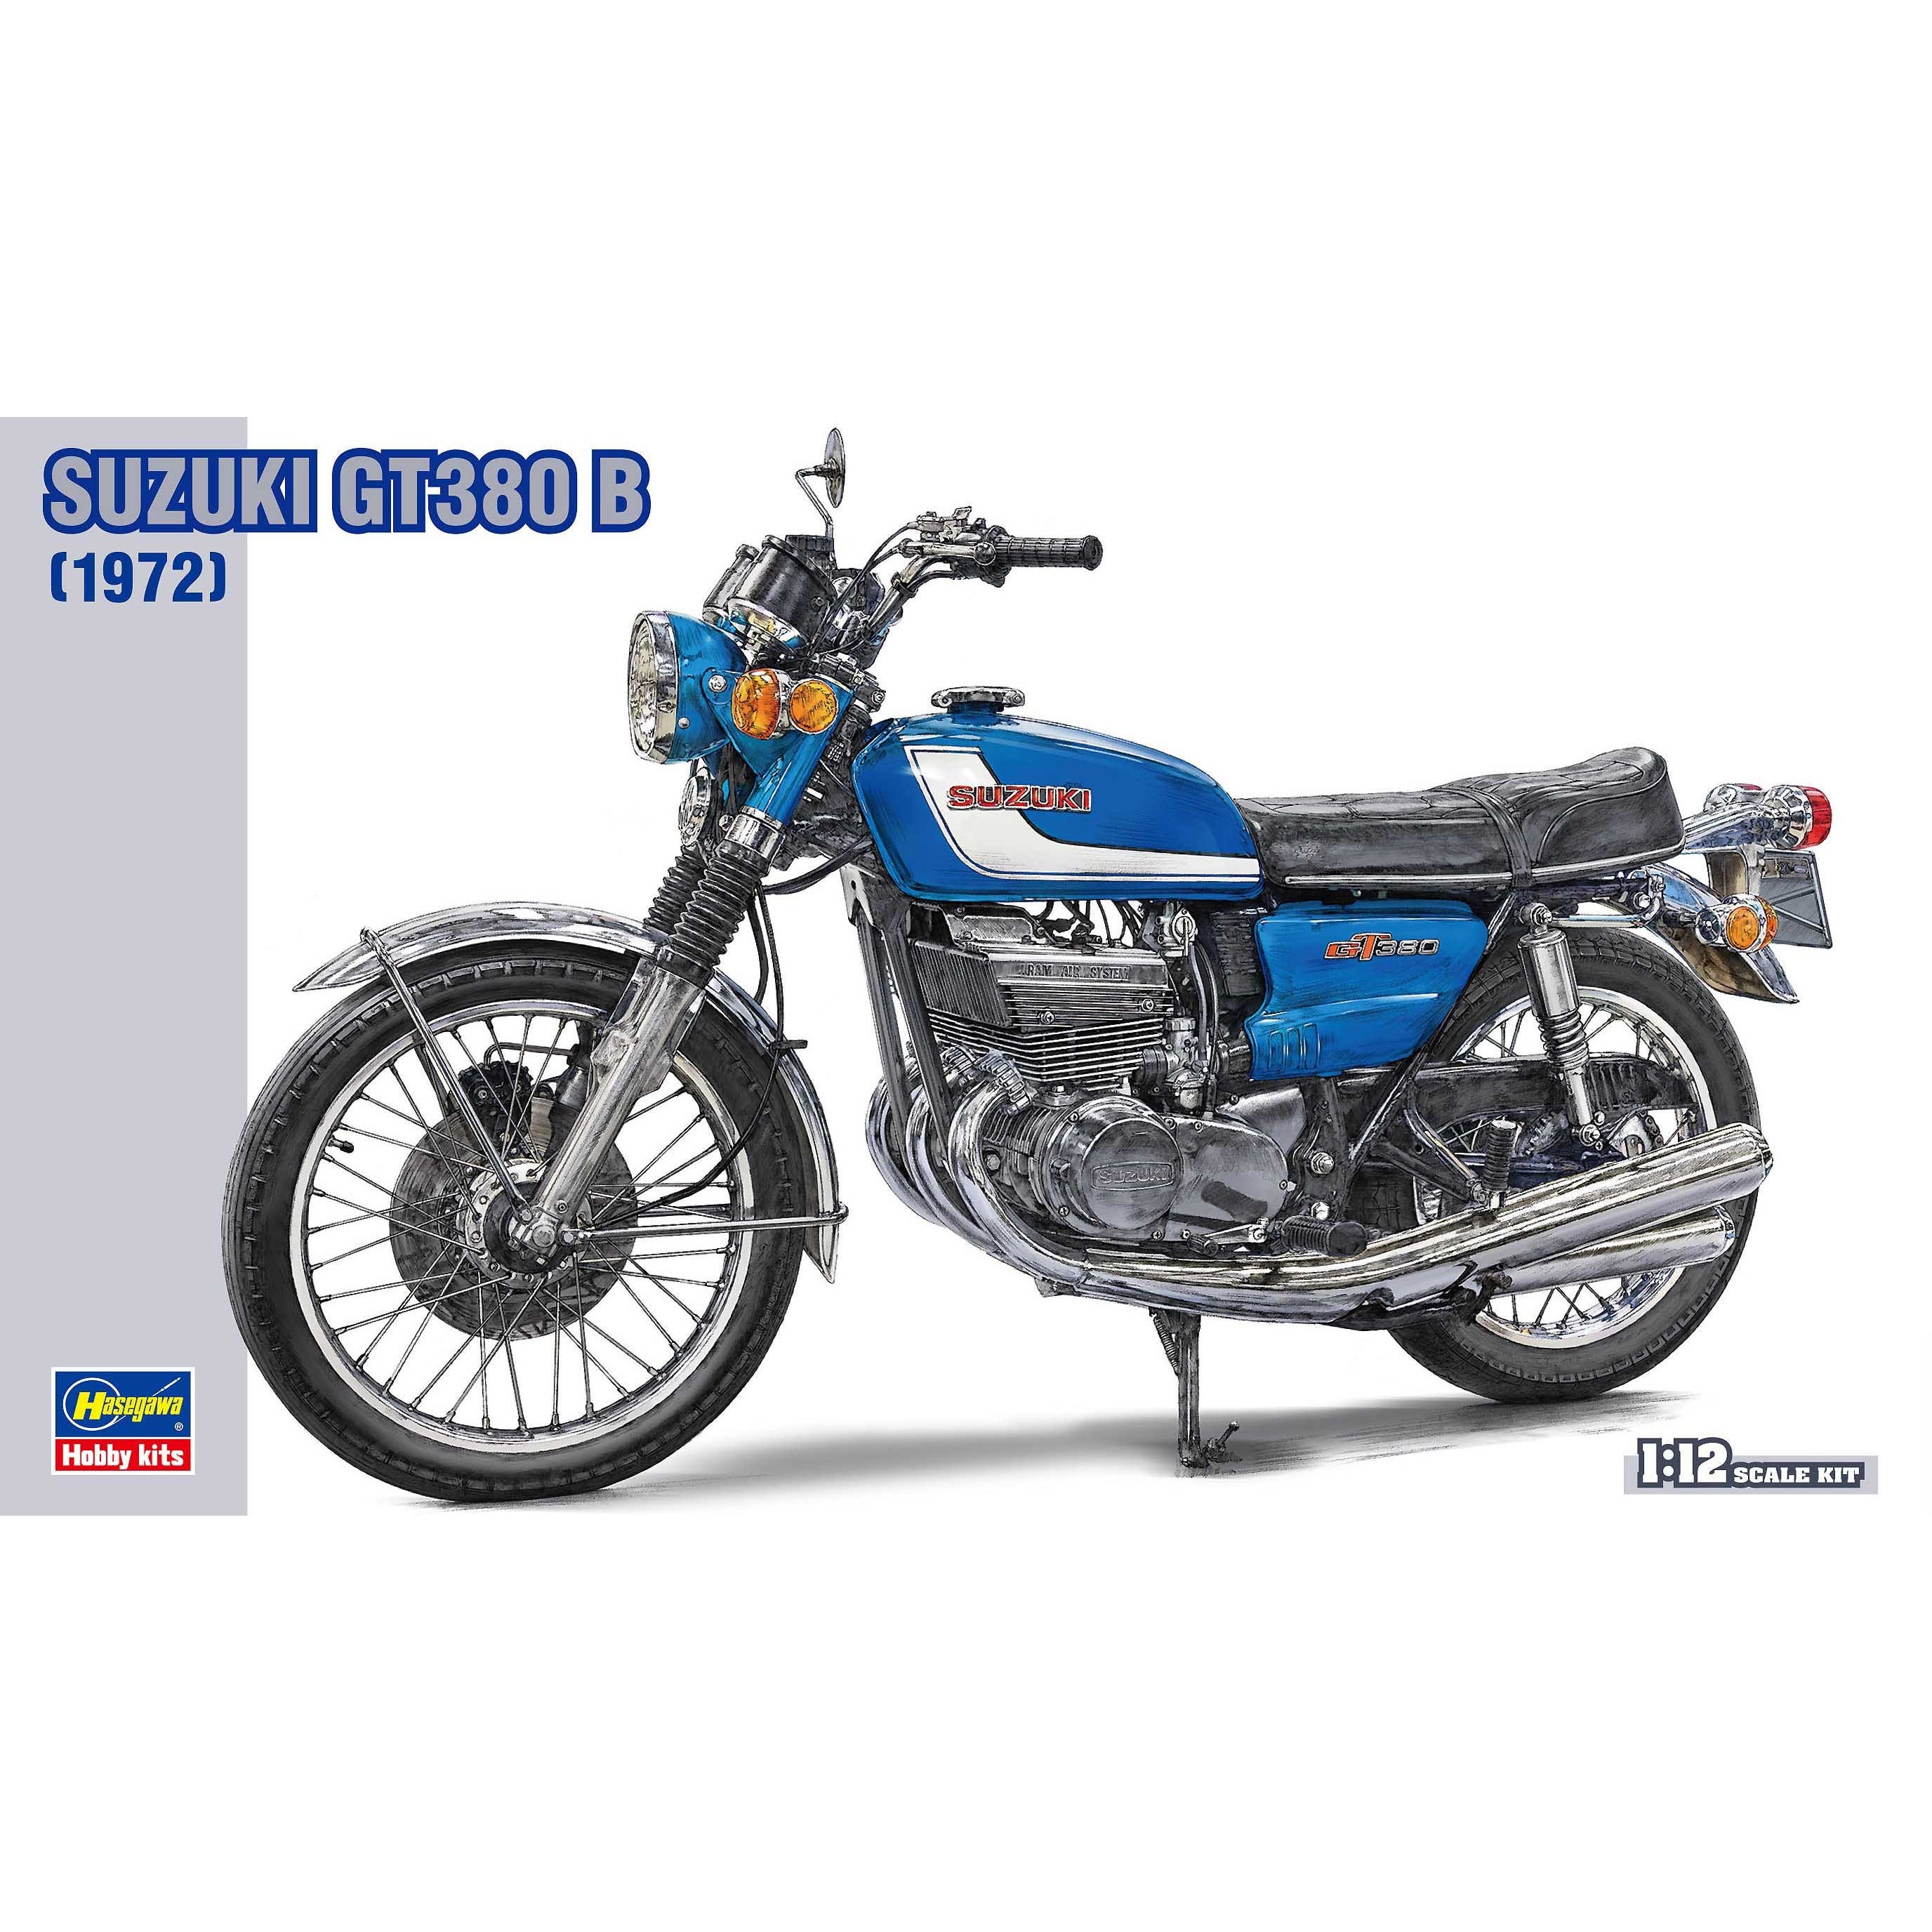 1972 Suzuki GT380B Motorcycle 1/12 #21505 by Hasegawa